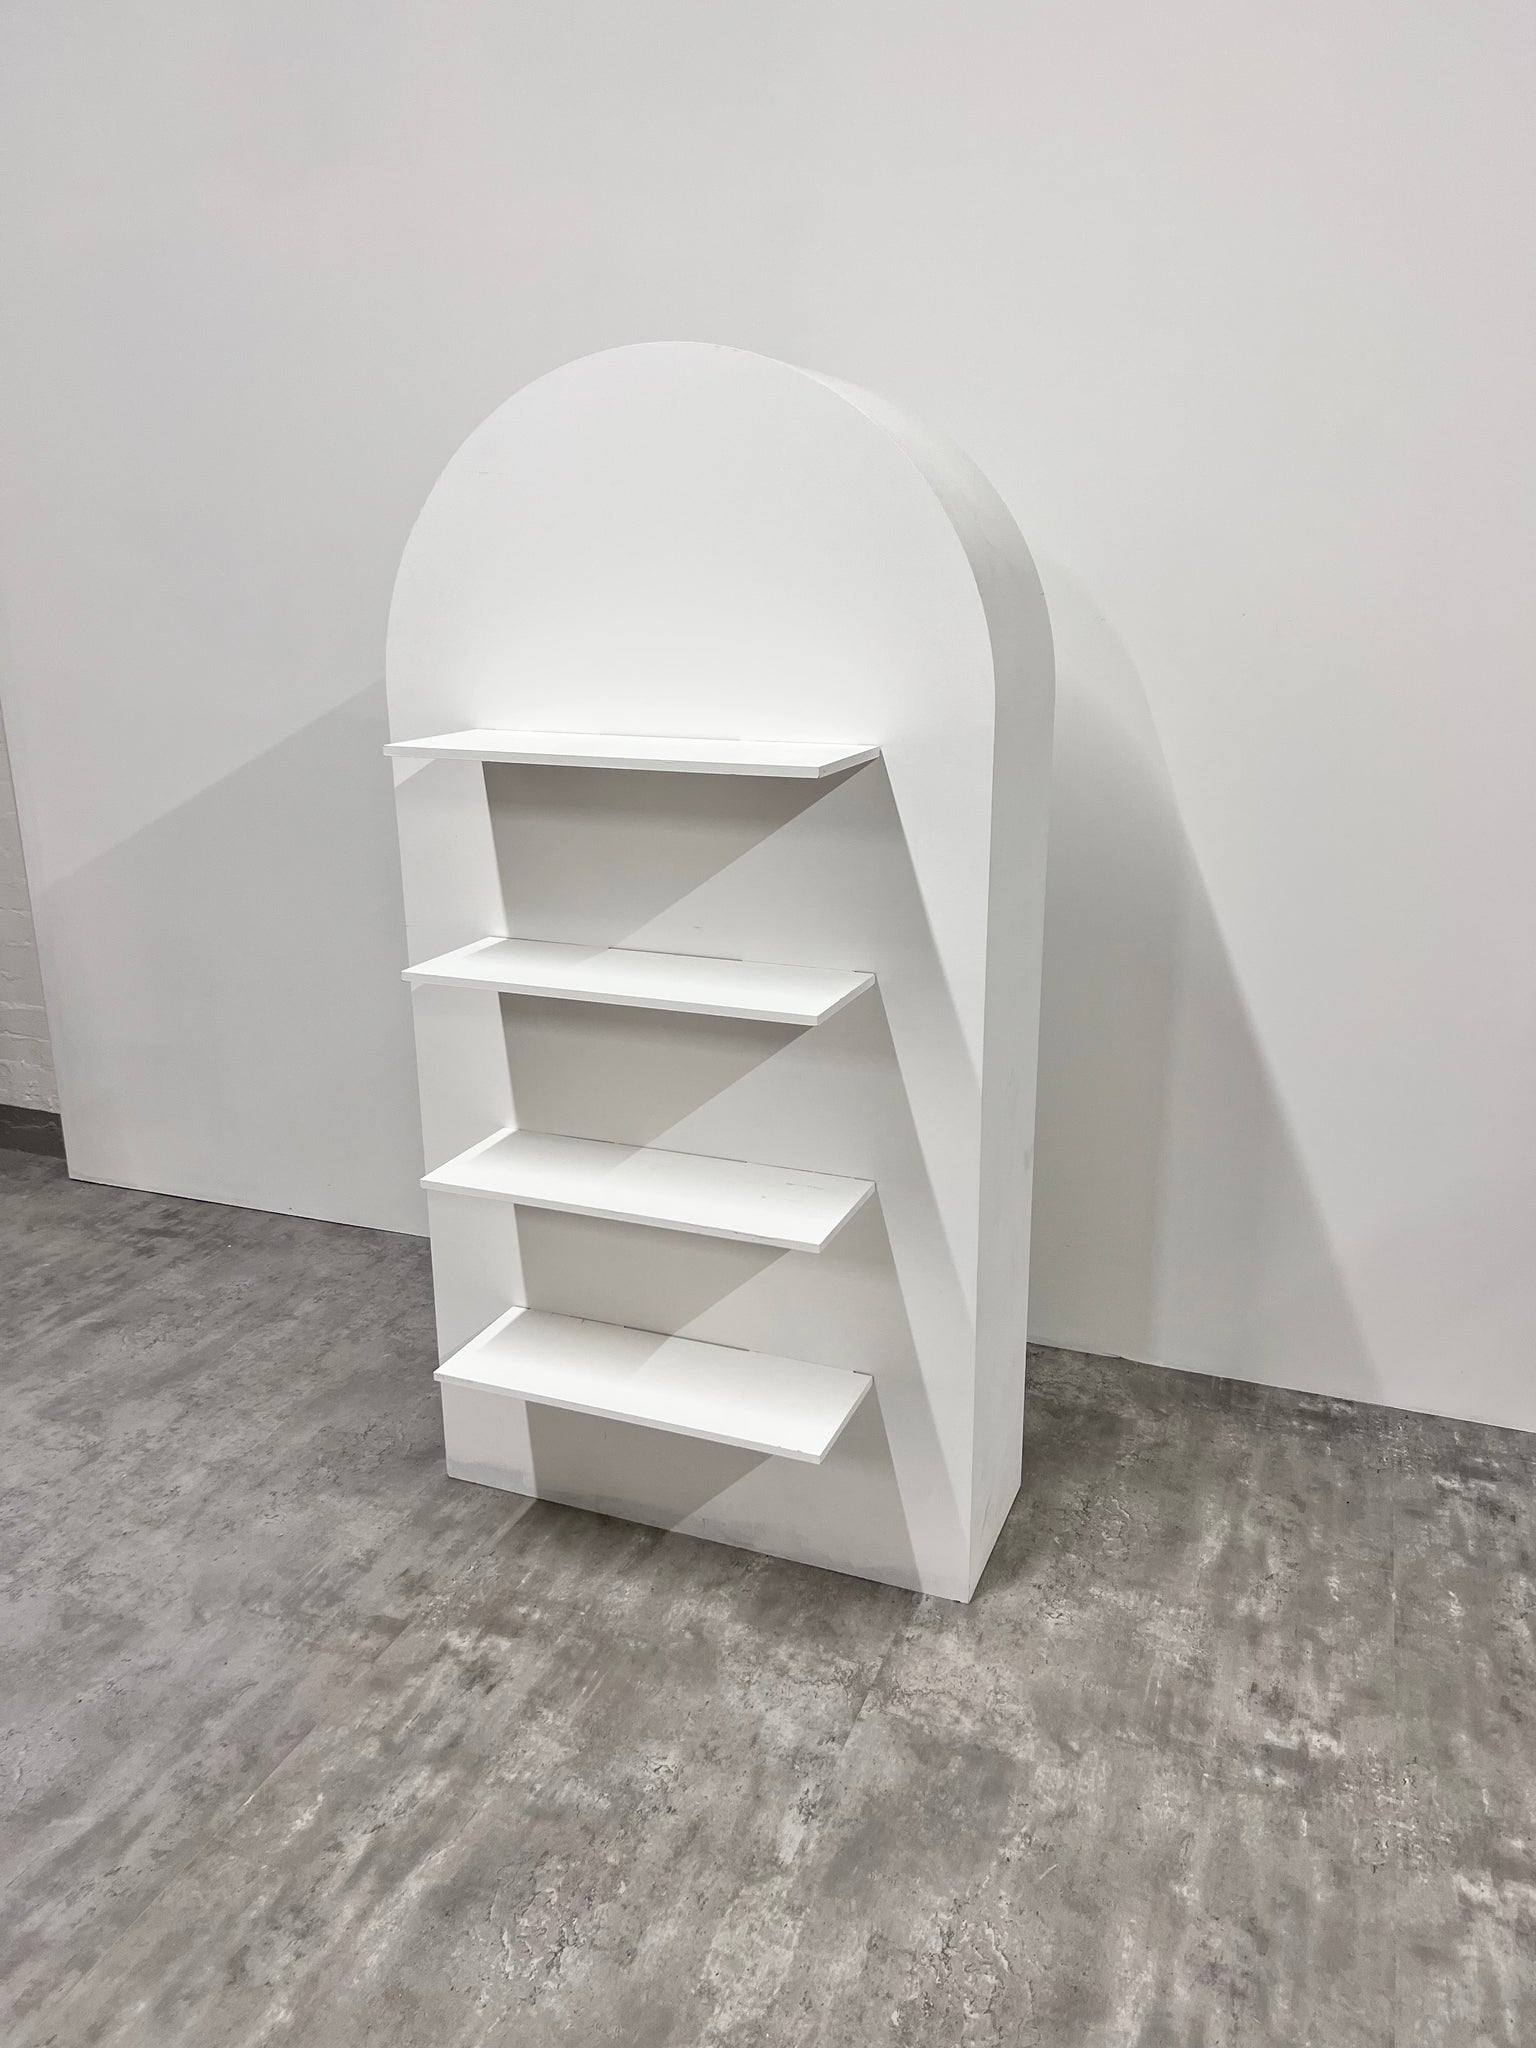 Clearance 3D Shelf Stand 83cm x 163cm